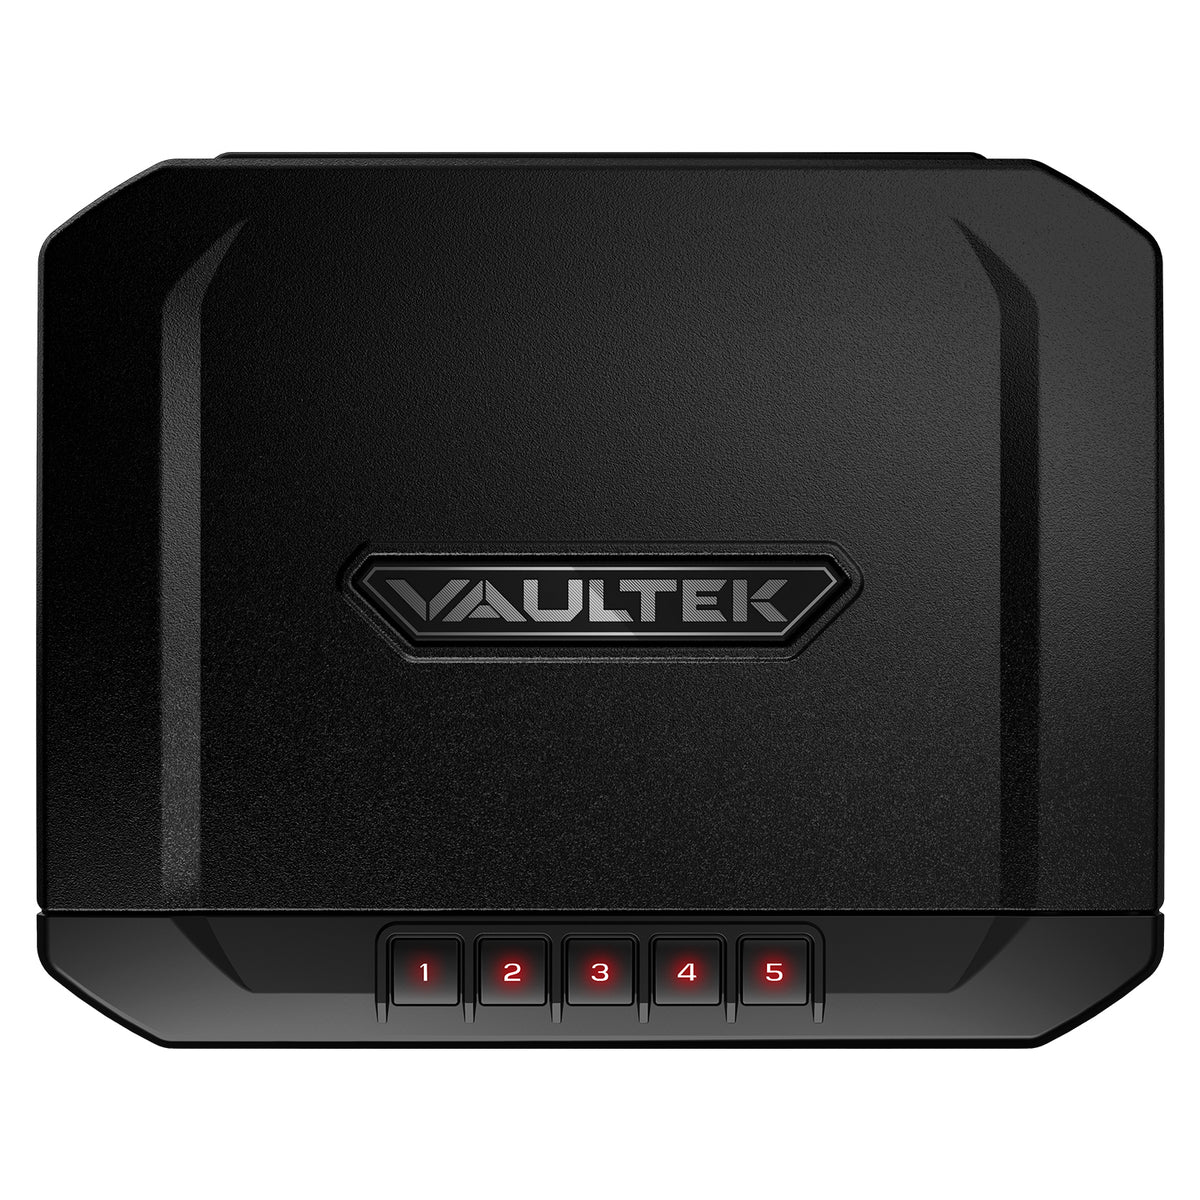 Vaultek - 10 Series VE10Sub-Compact Keypad Gun Safe